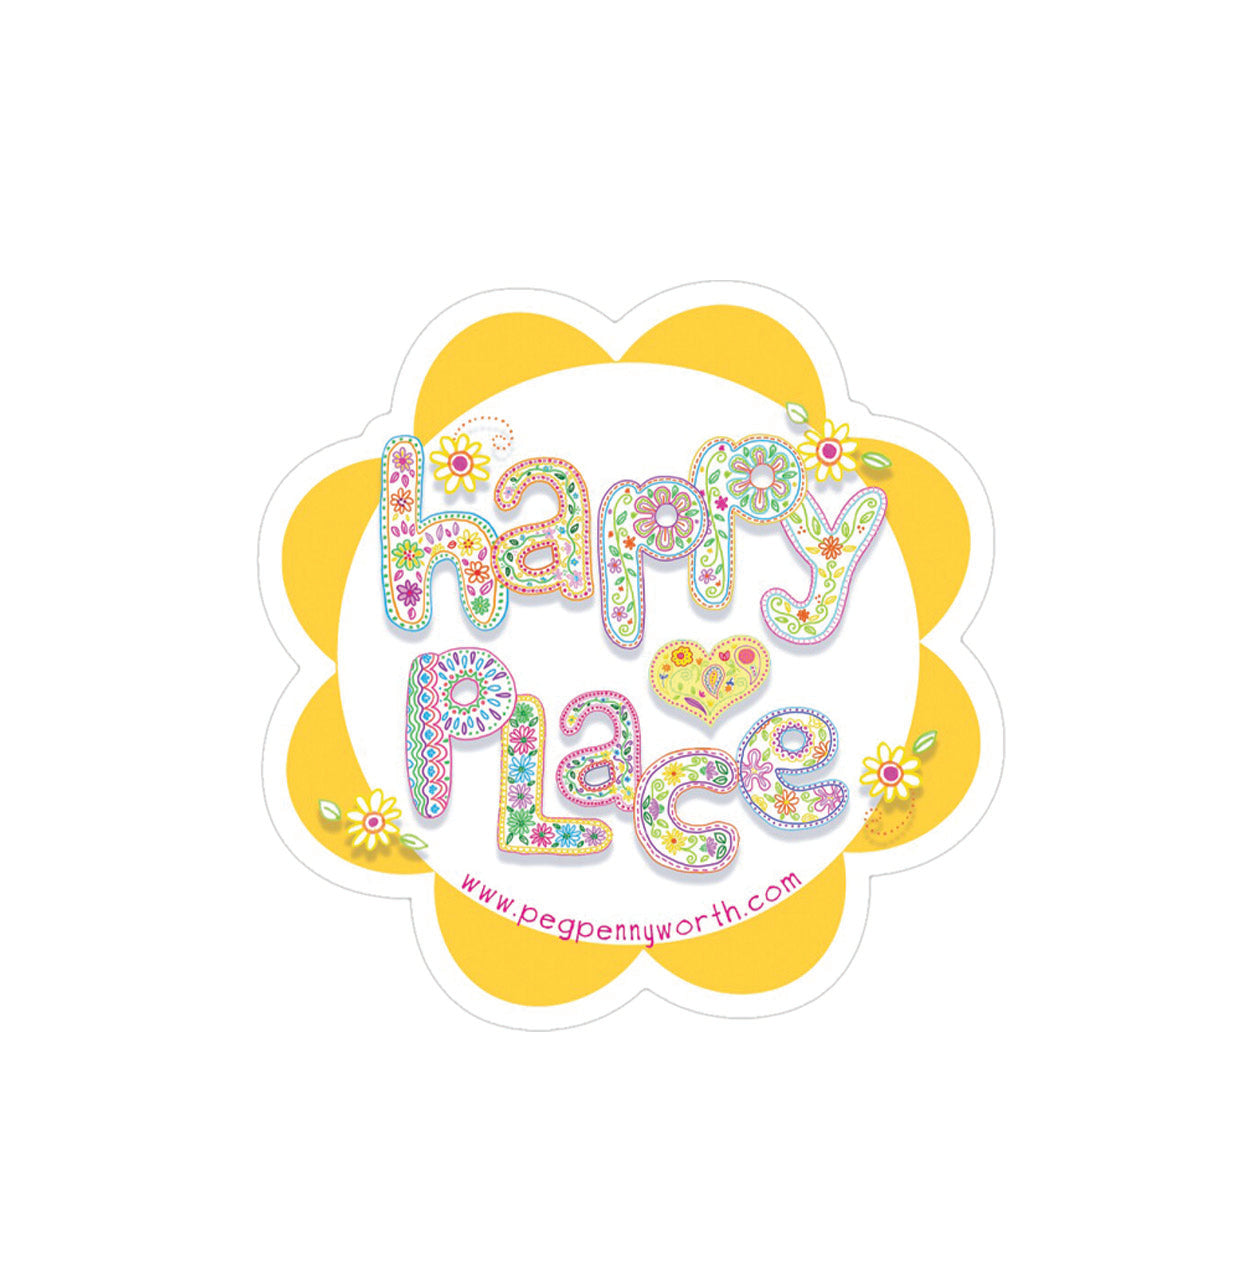 Happy Place Sticker